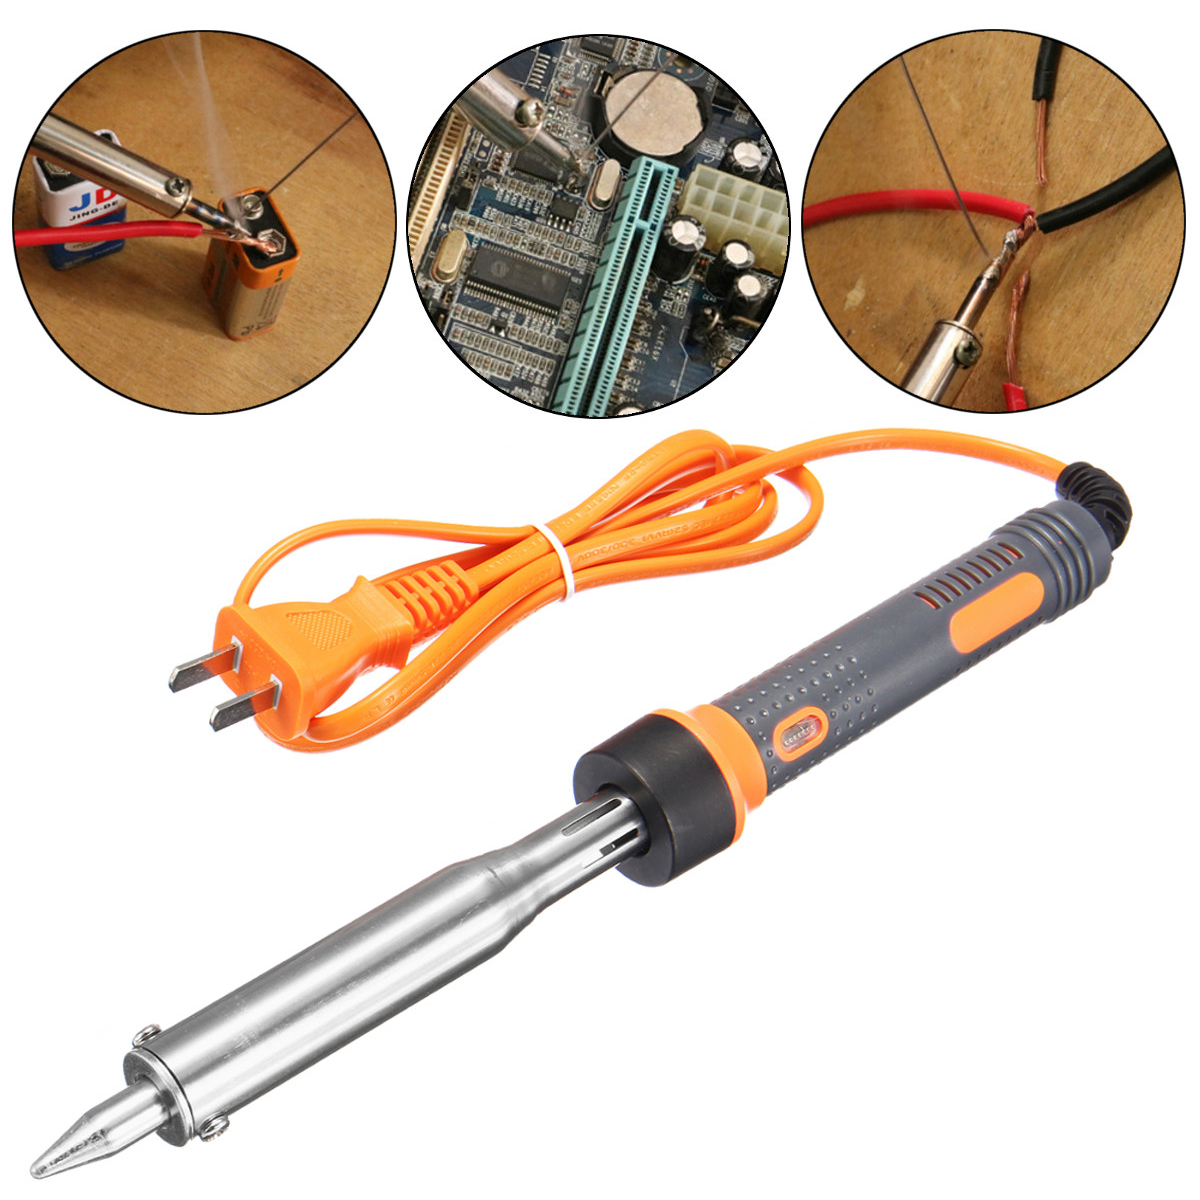 

220V 100W/150W Electric Heating Pencil Welding Soldering Gun Solder Iron Tool